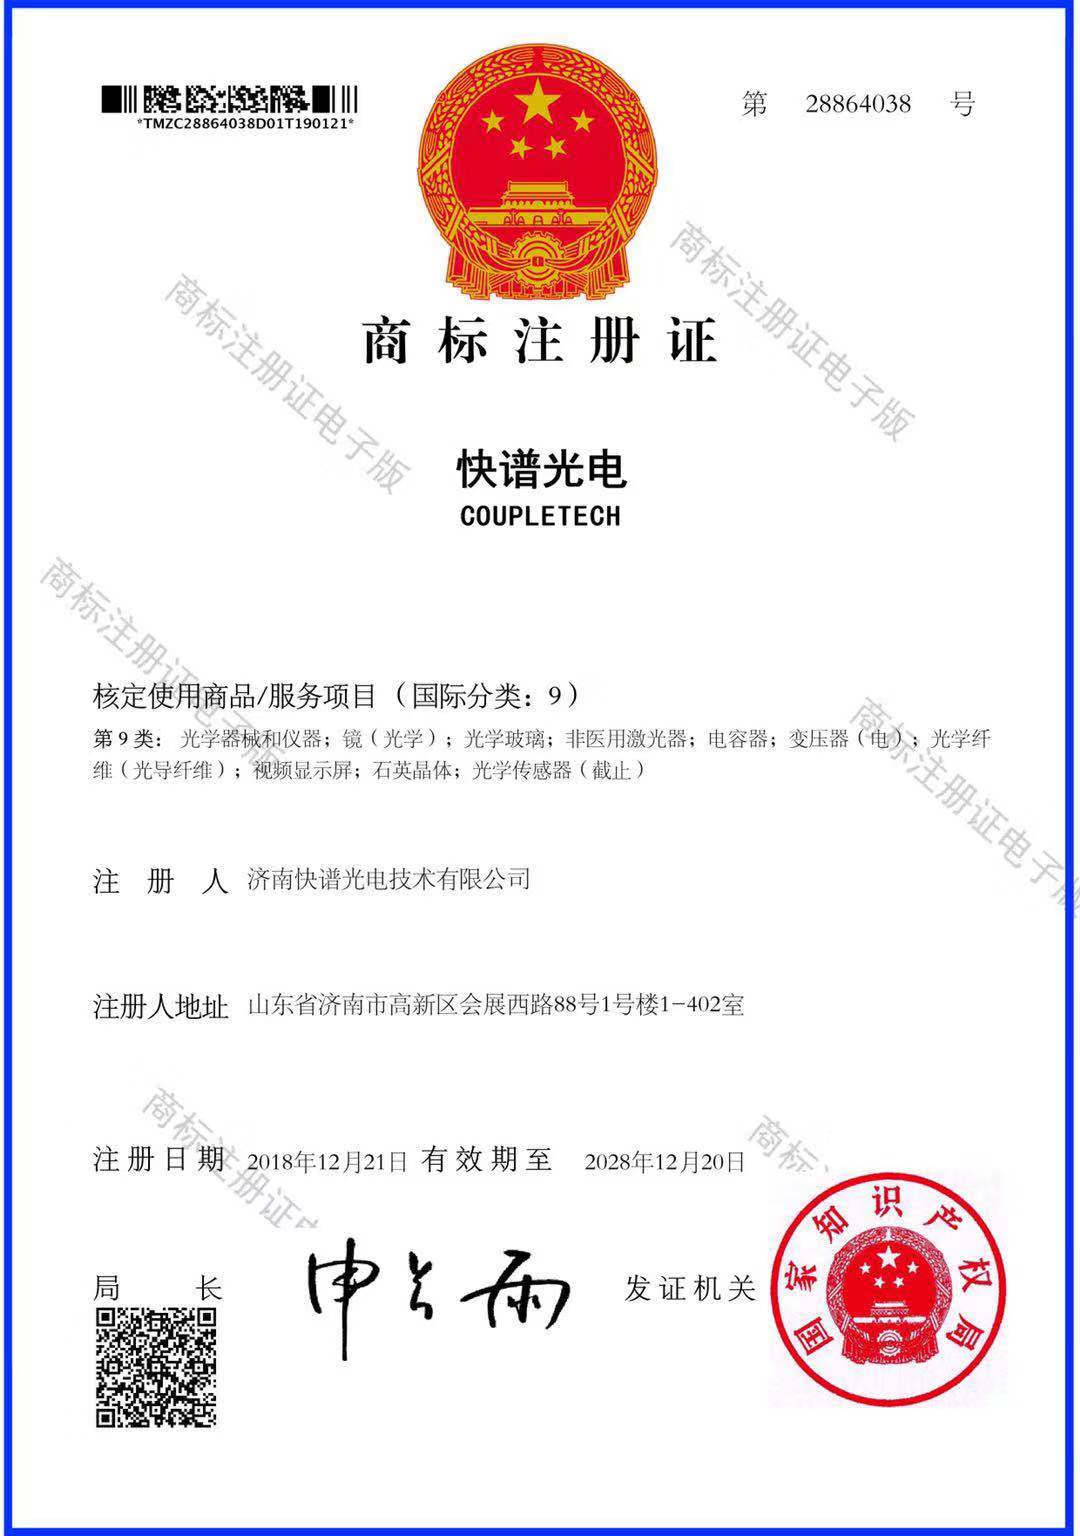 Coupletech Obtain Trademark registration certificate1